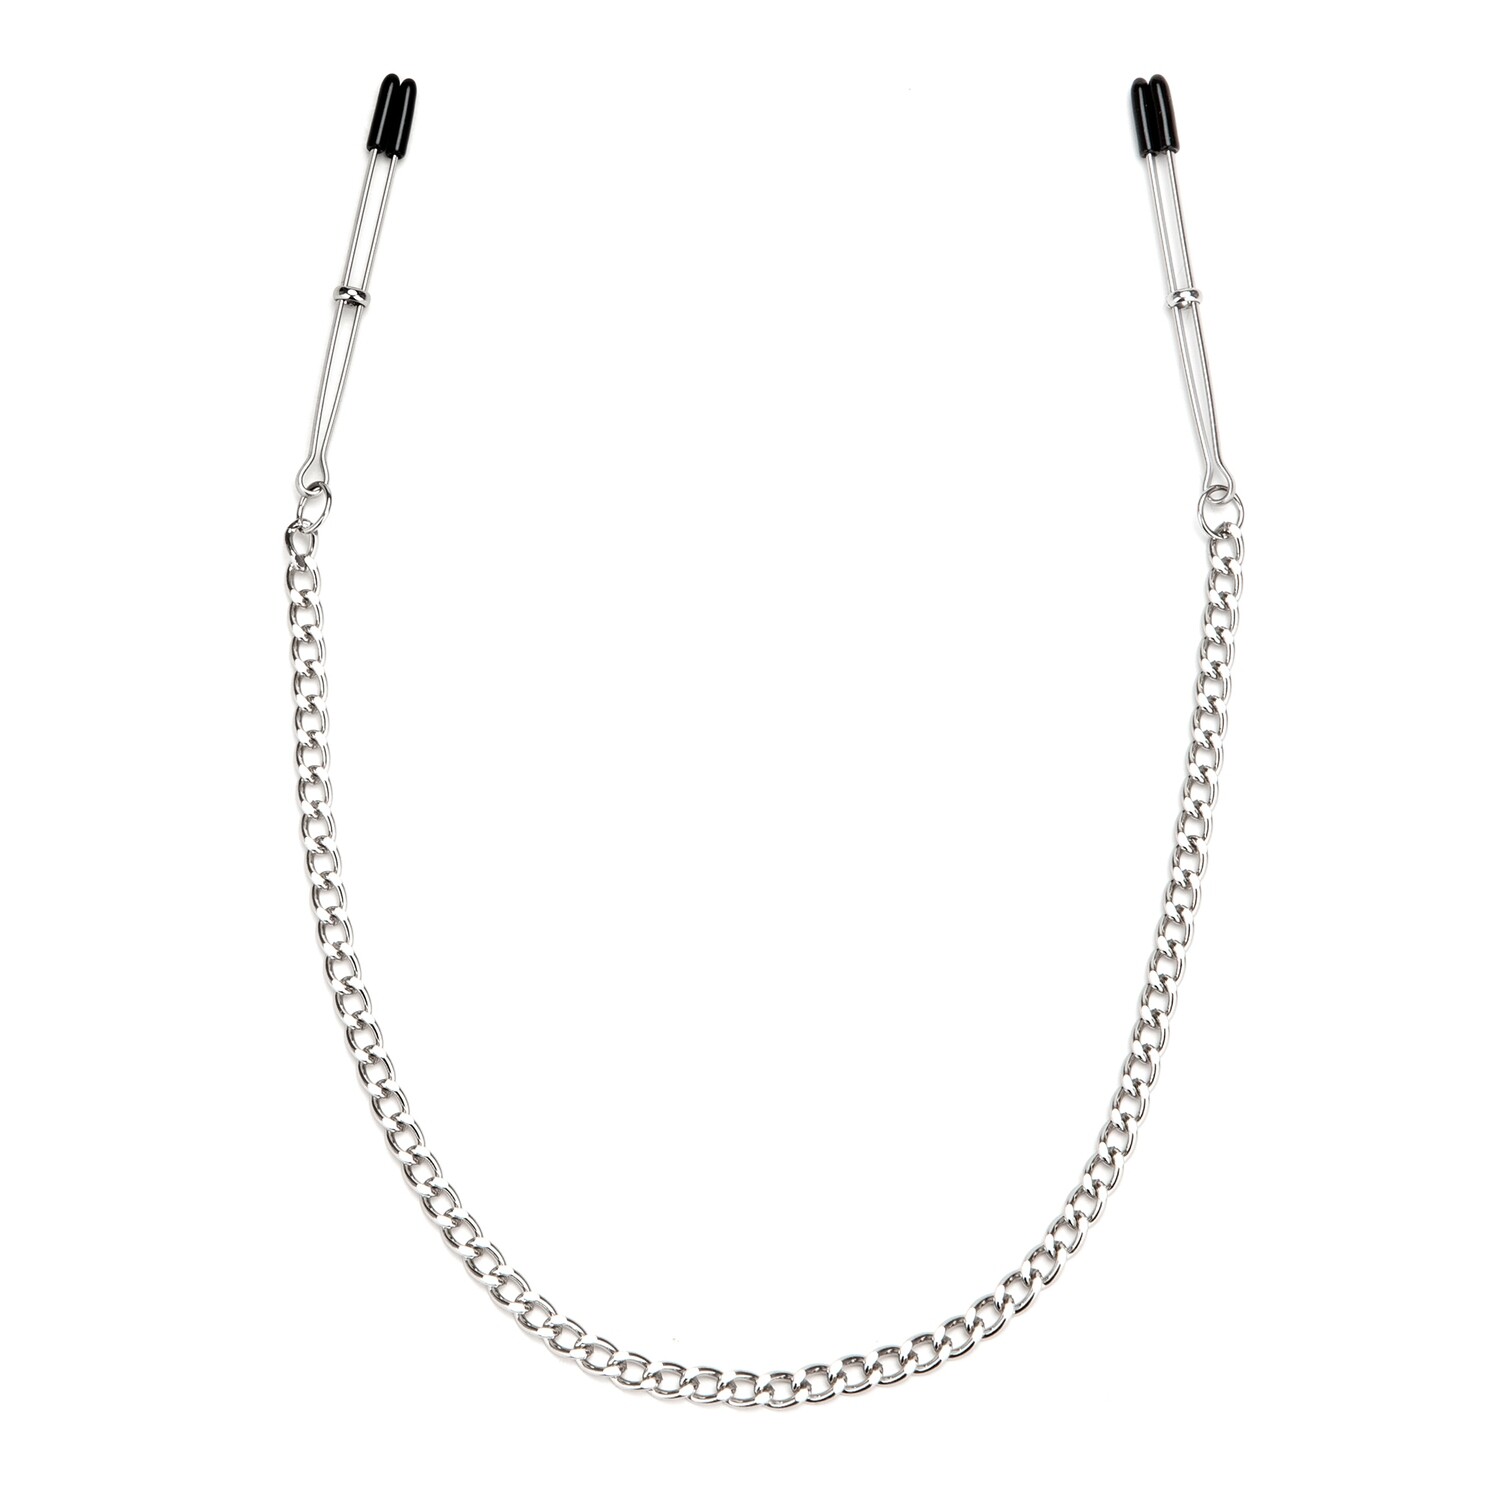 Adjustable Tweezer Nipple Clips With Chain